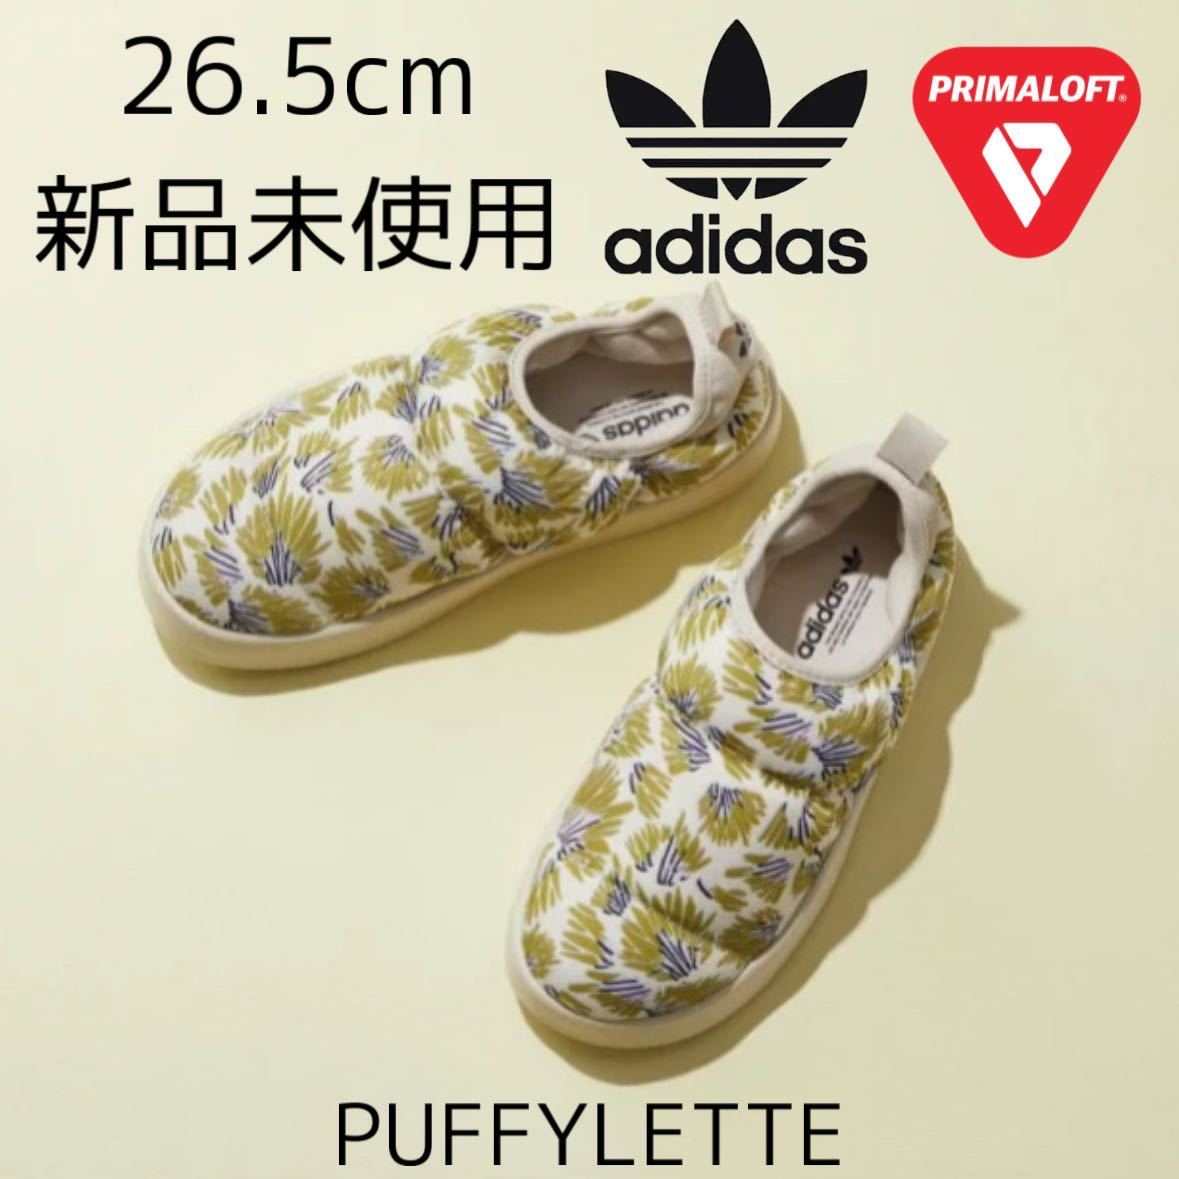 26.5cm 新品 adidas Originals PUFFYLETTE W 保温 撥水 PRIMALOFT